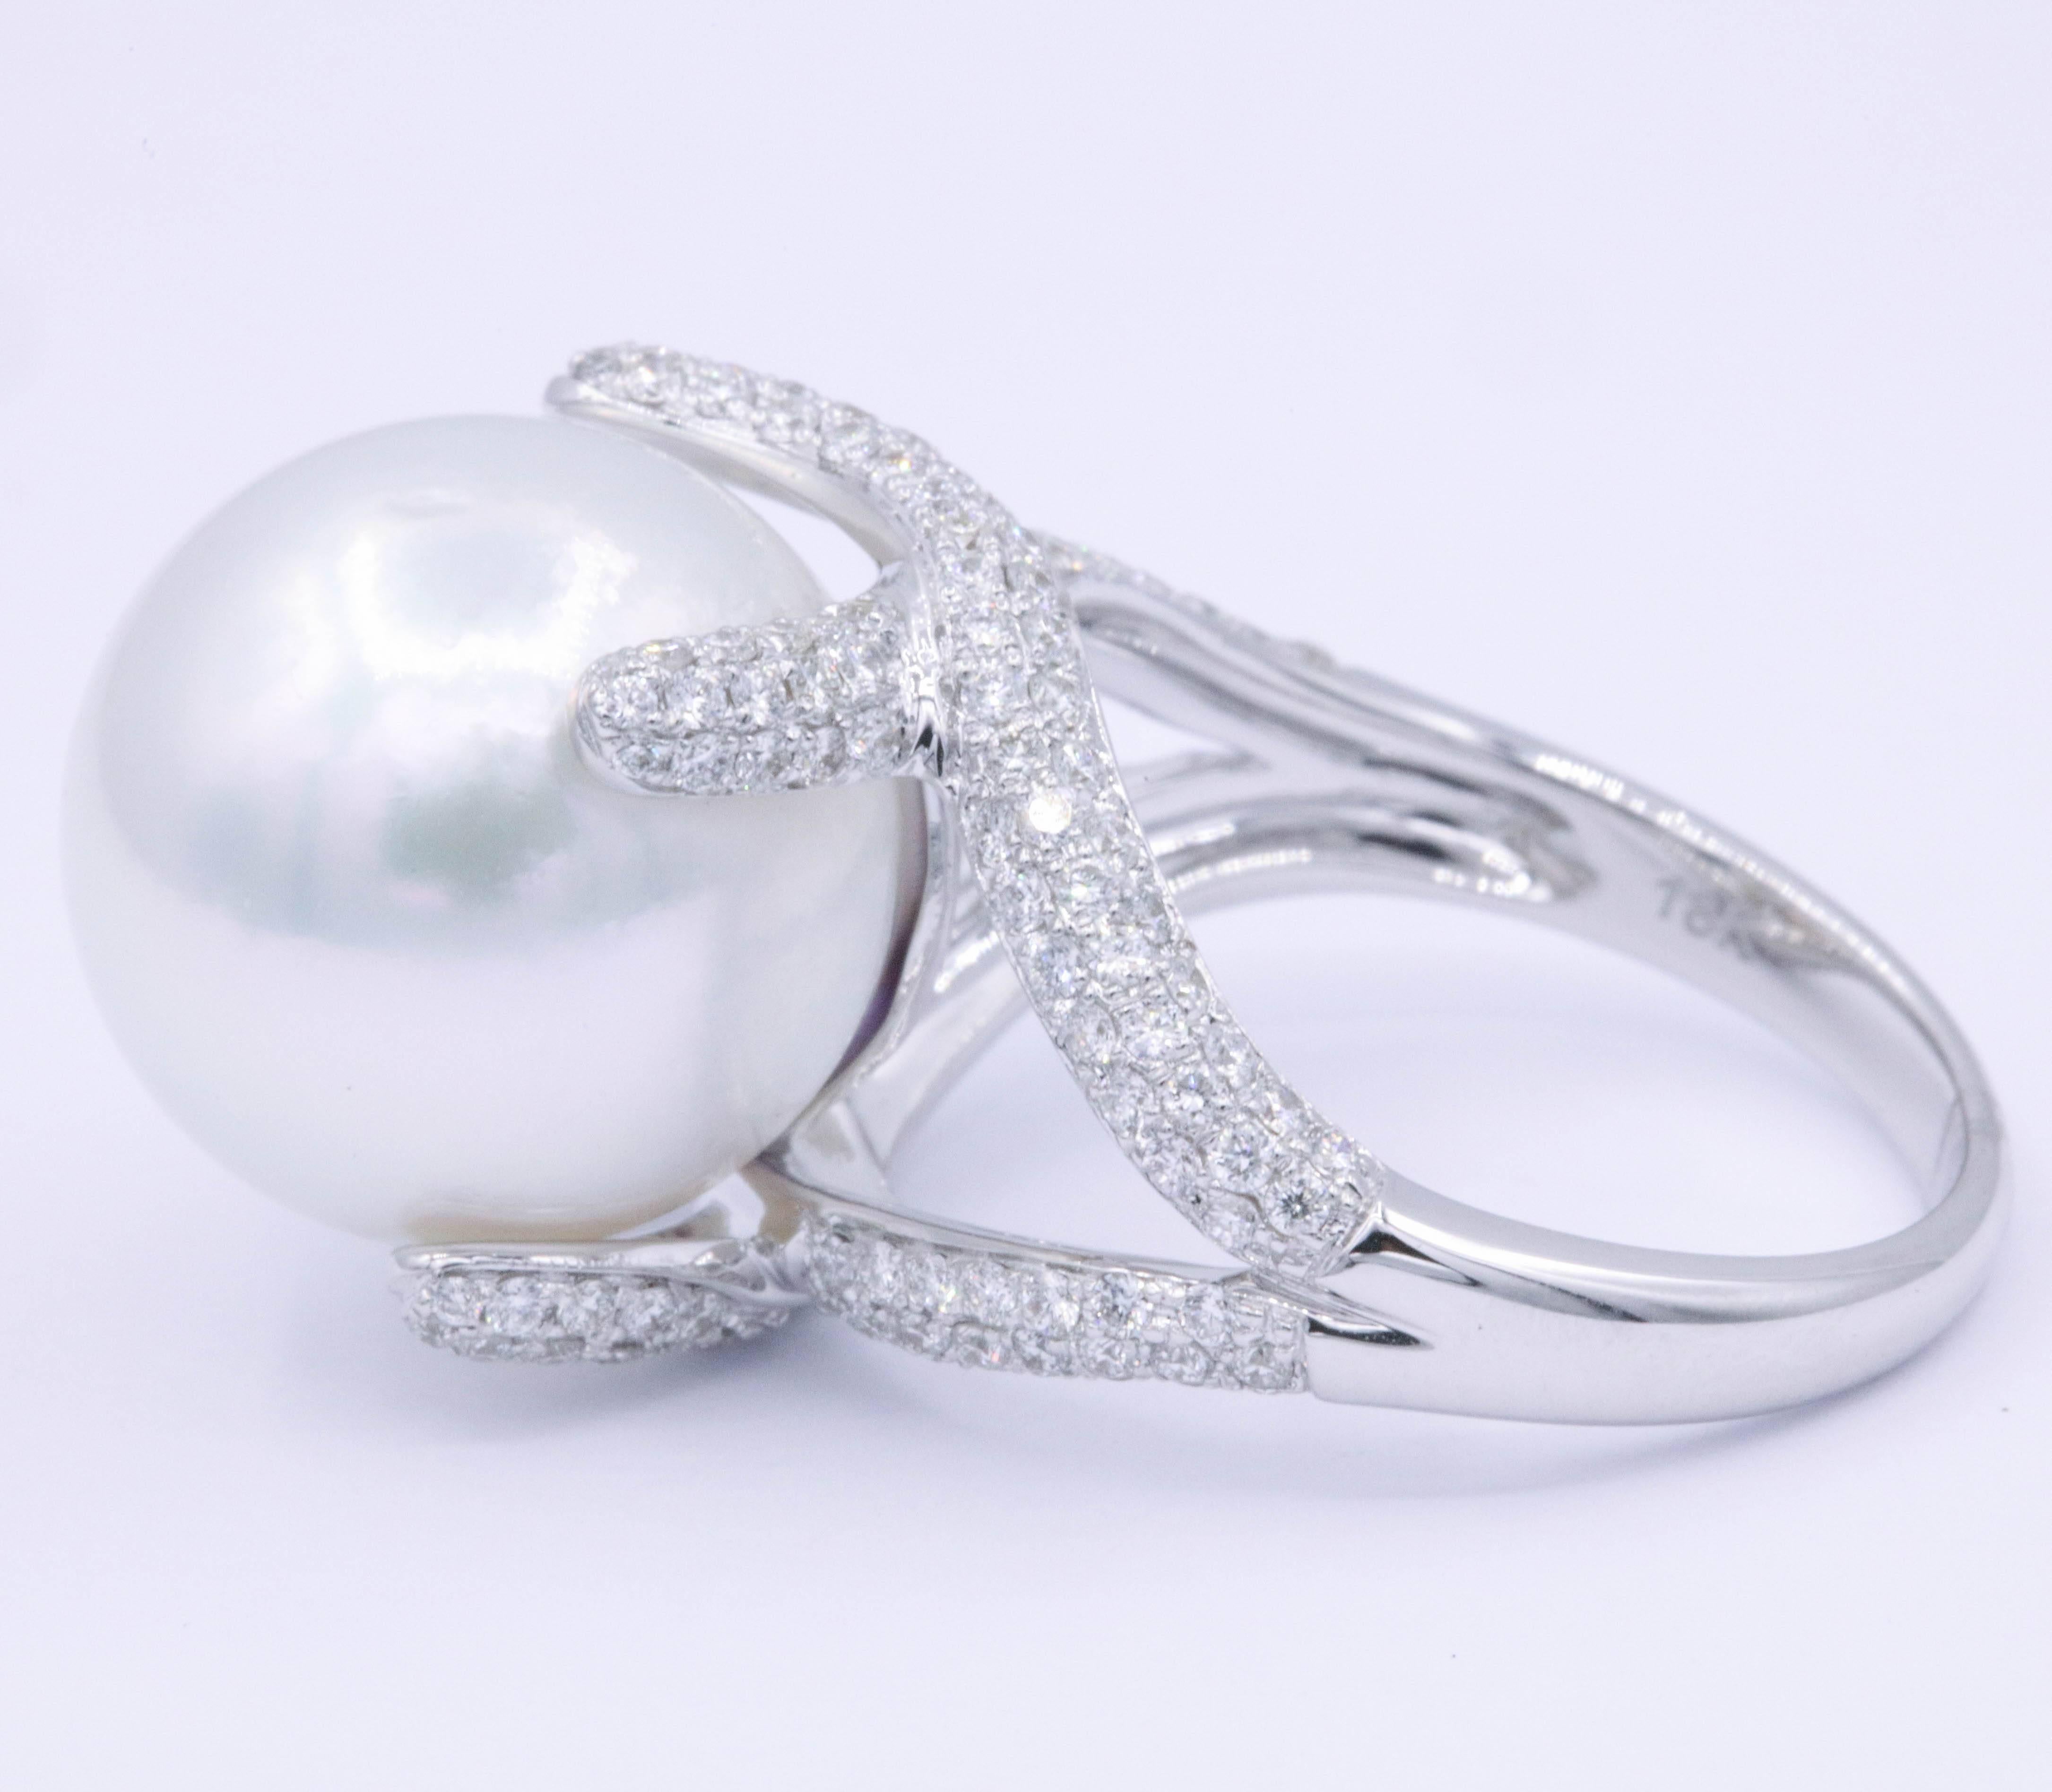 13-14 mm South Sea Pearl
Diamonds: 0.90 Carats 
5.50 g.